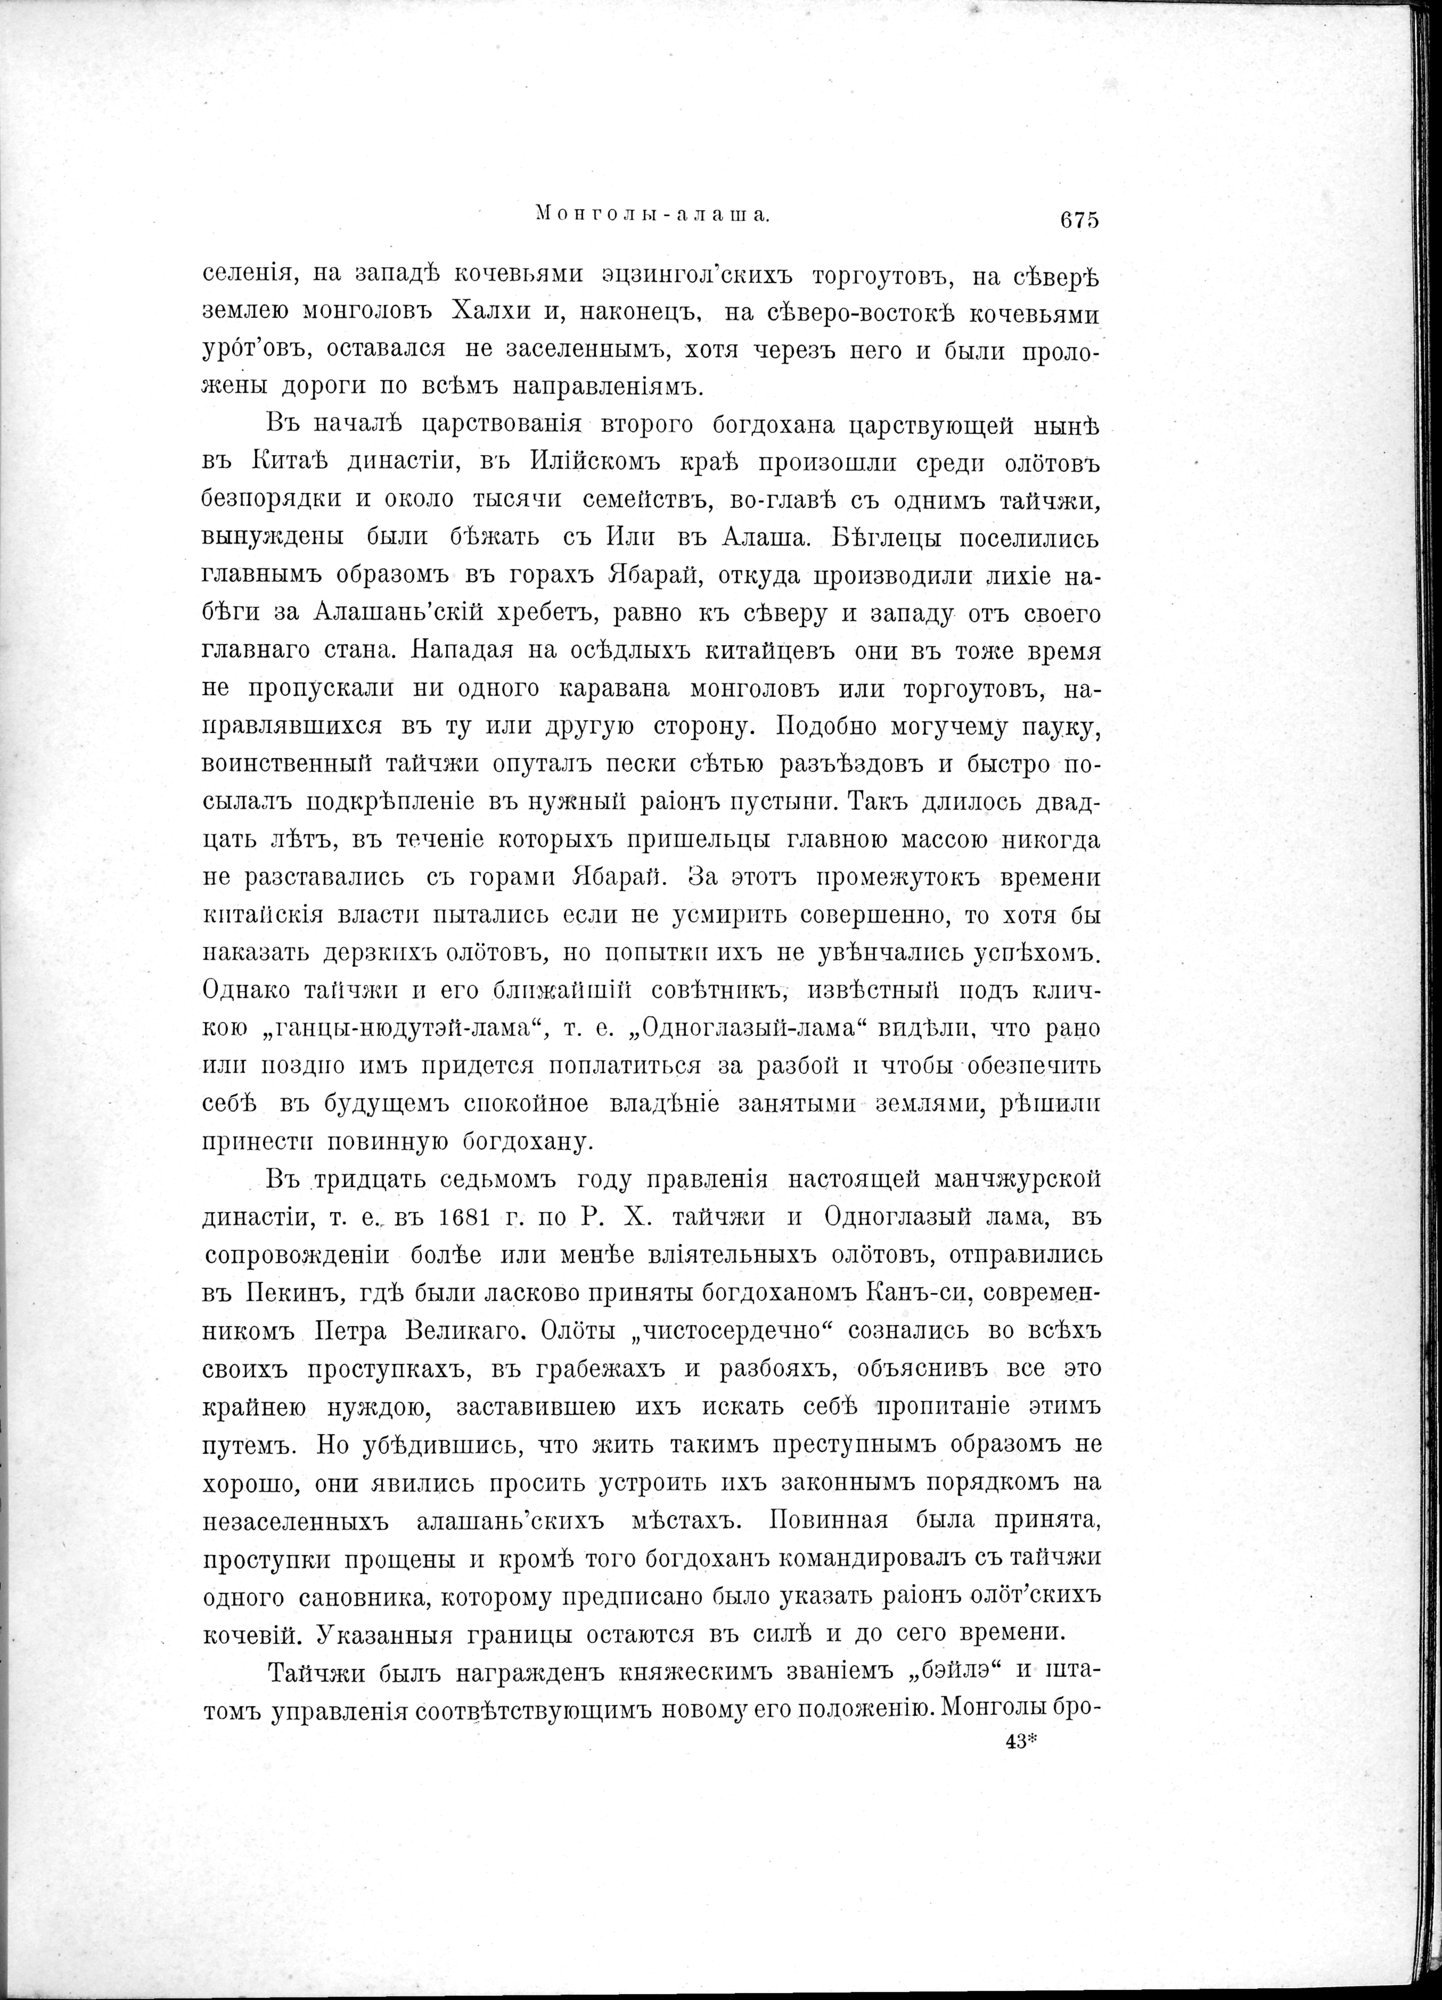 Mongoliia i Kam : vol.2 / Page 509 (Grayscale High Resolution Image)